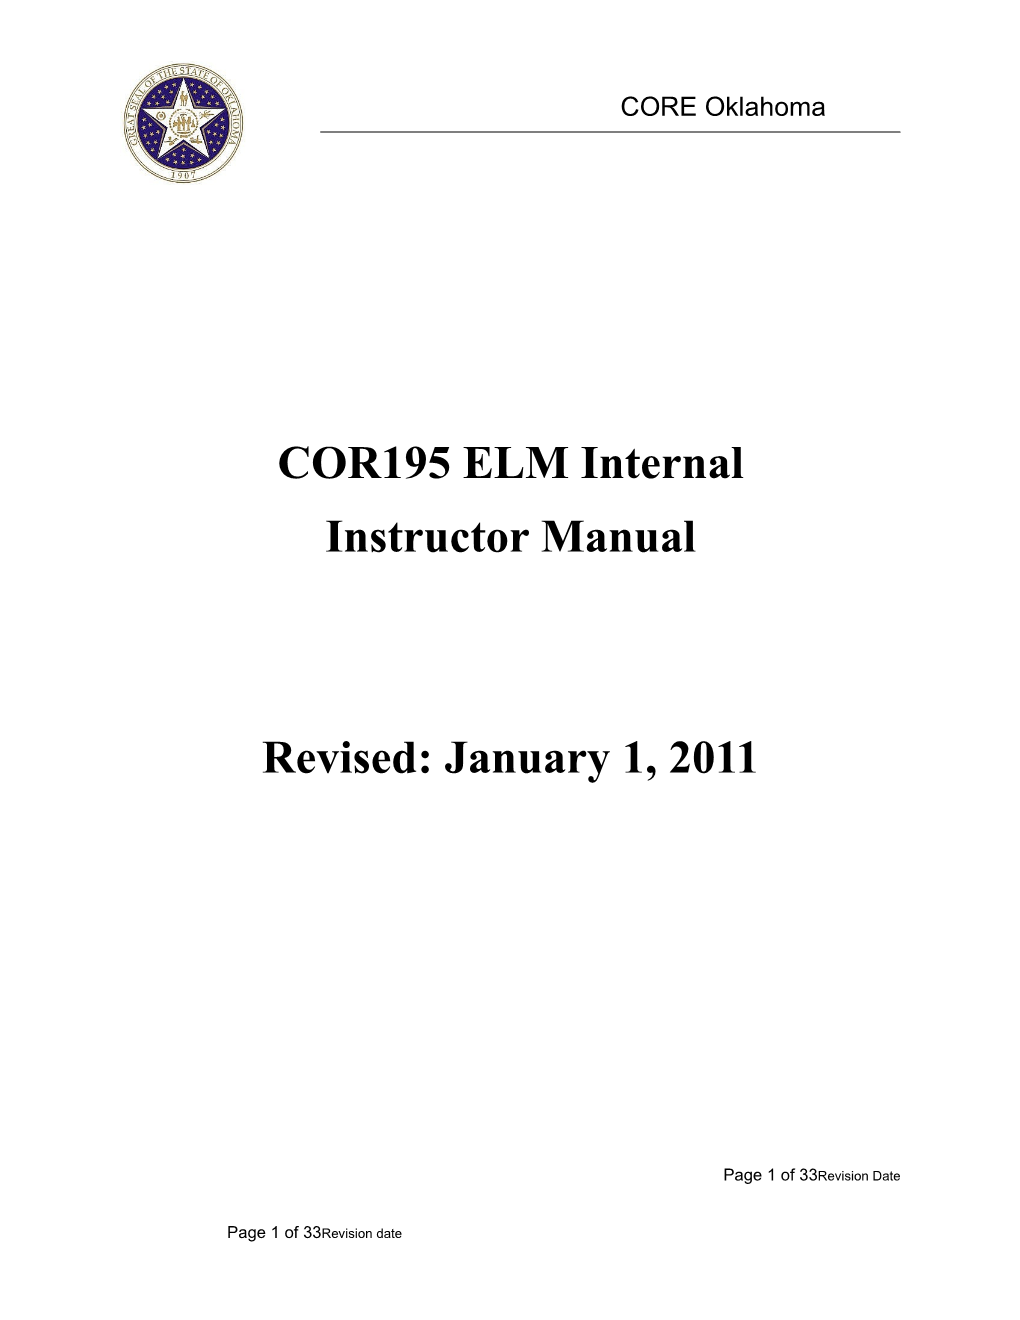 COR 195 ELM Internal Instructor Manual